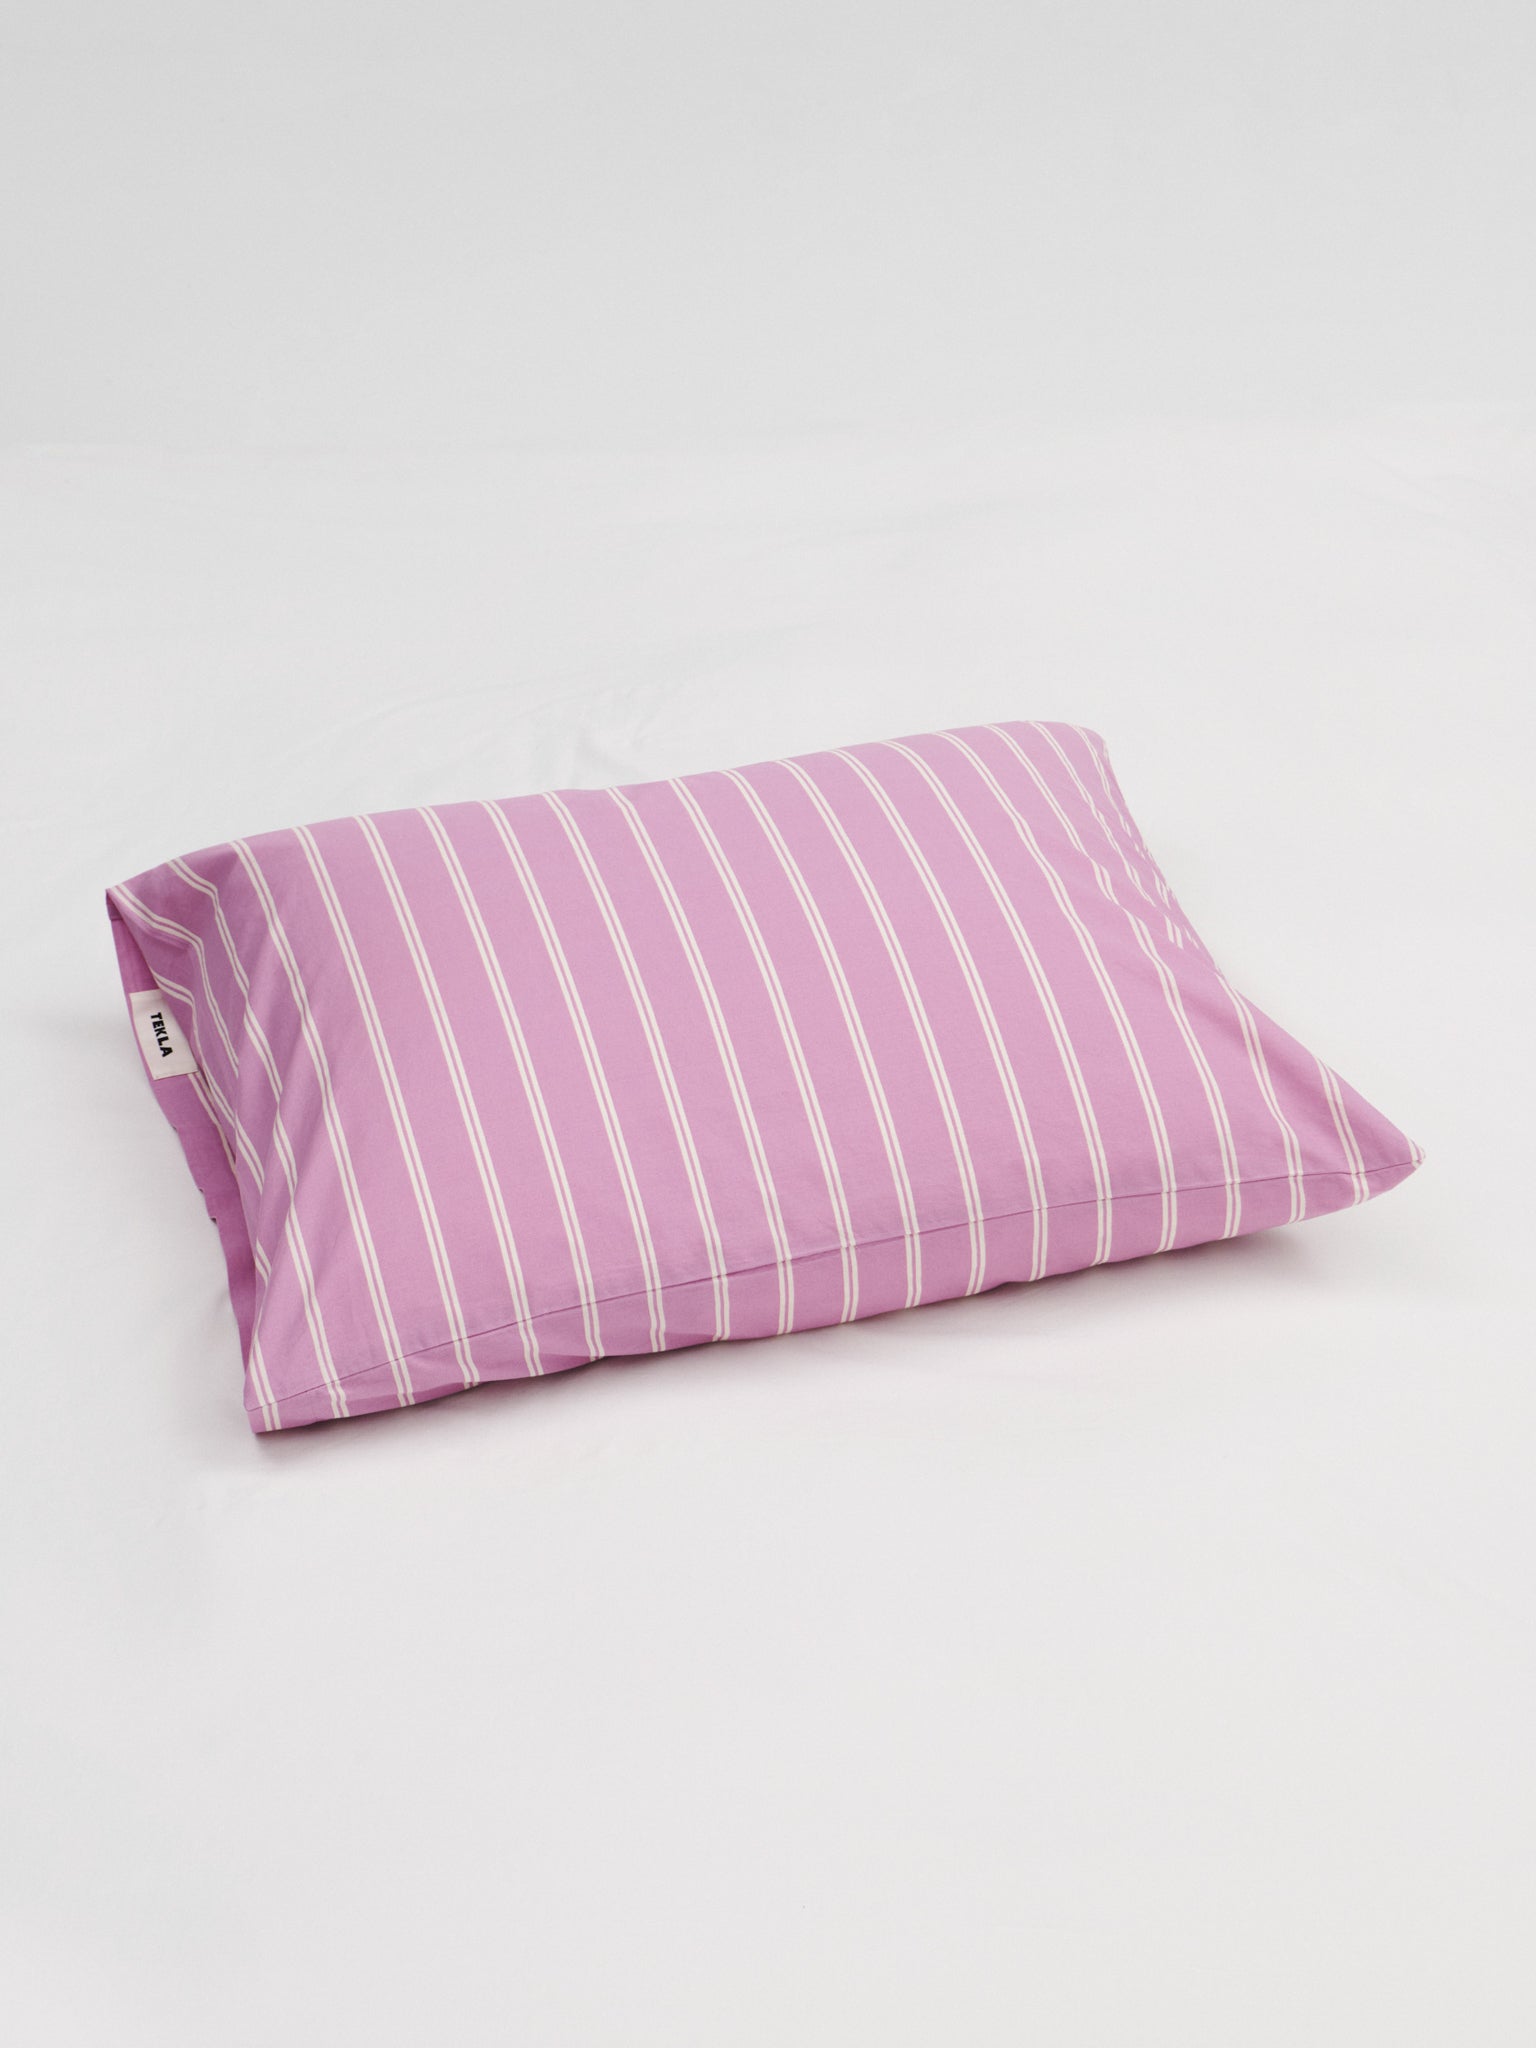 Tekla - Percale Pillow Sham in Mallow Pink Stripes